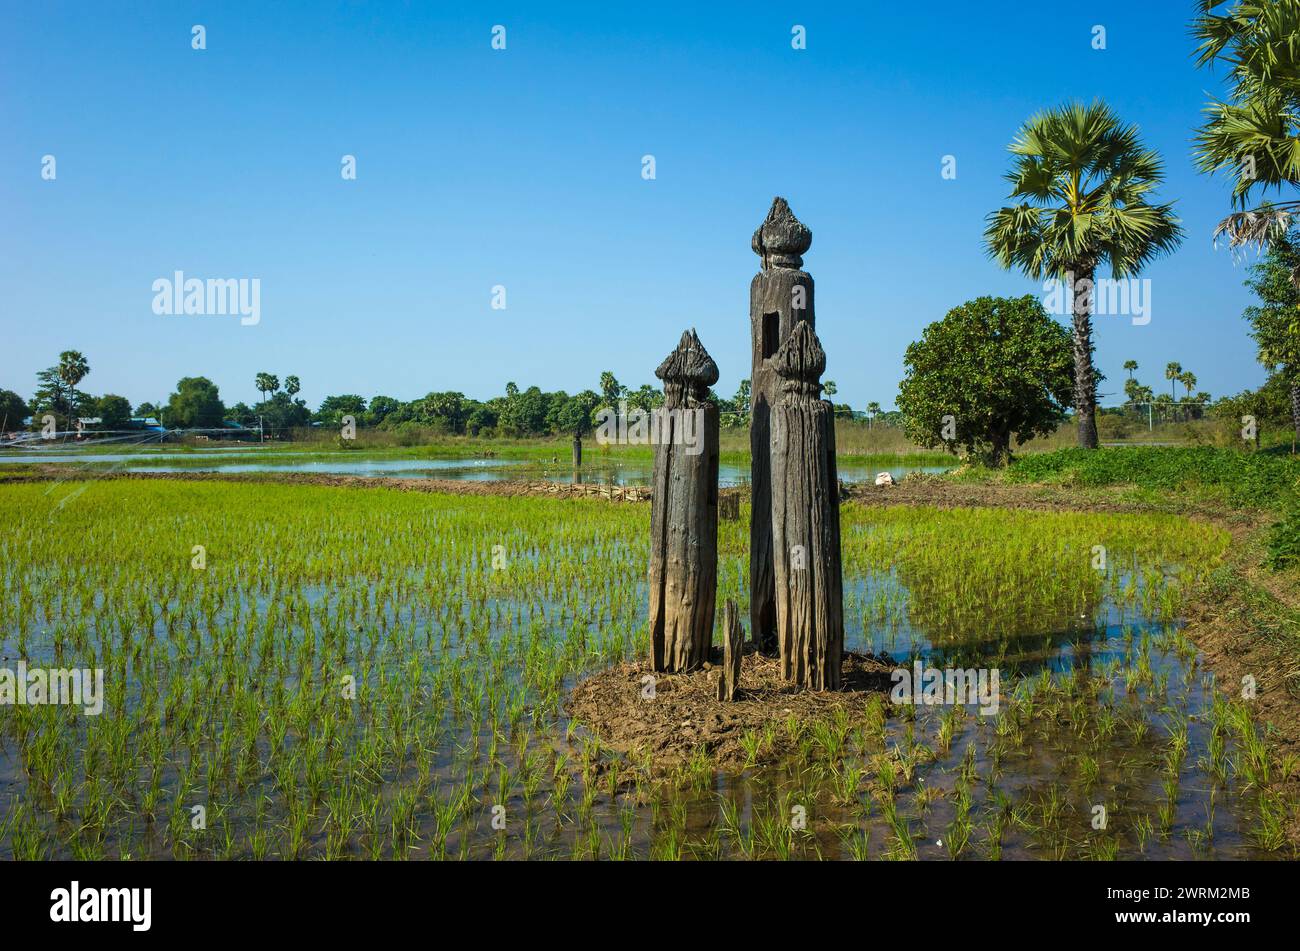 Ancient teak wood columns on rice fields in Inwa (Ava), Myanmar Stock Photo